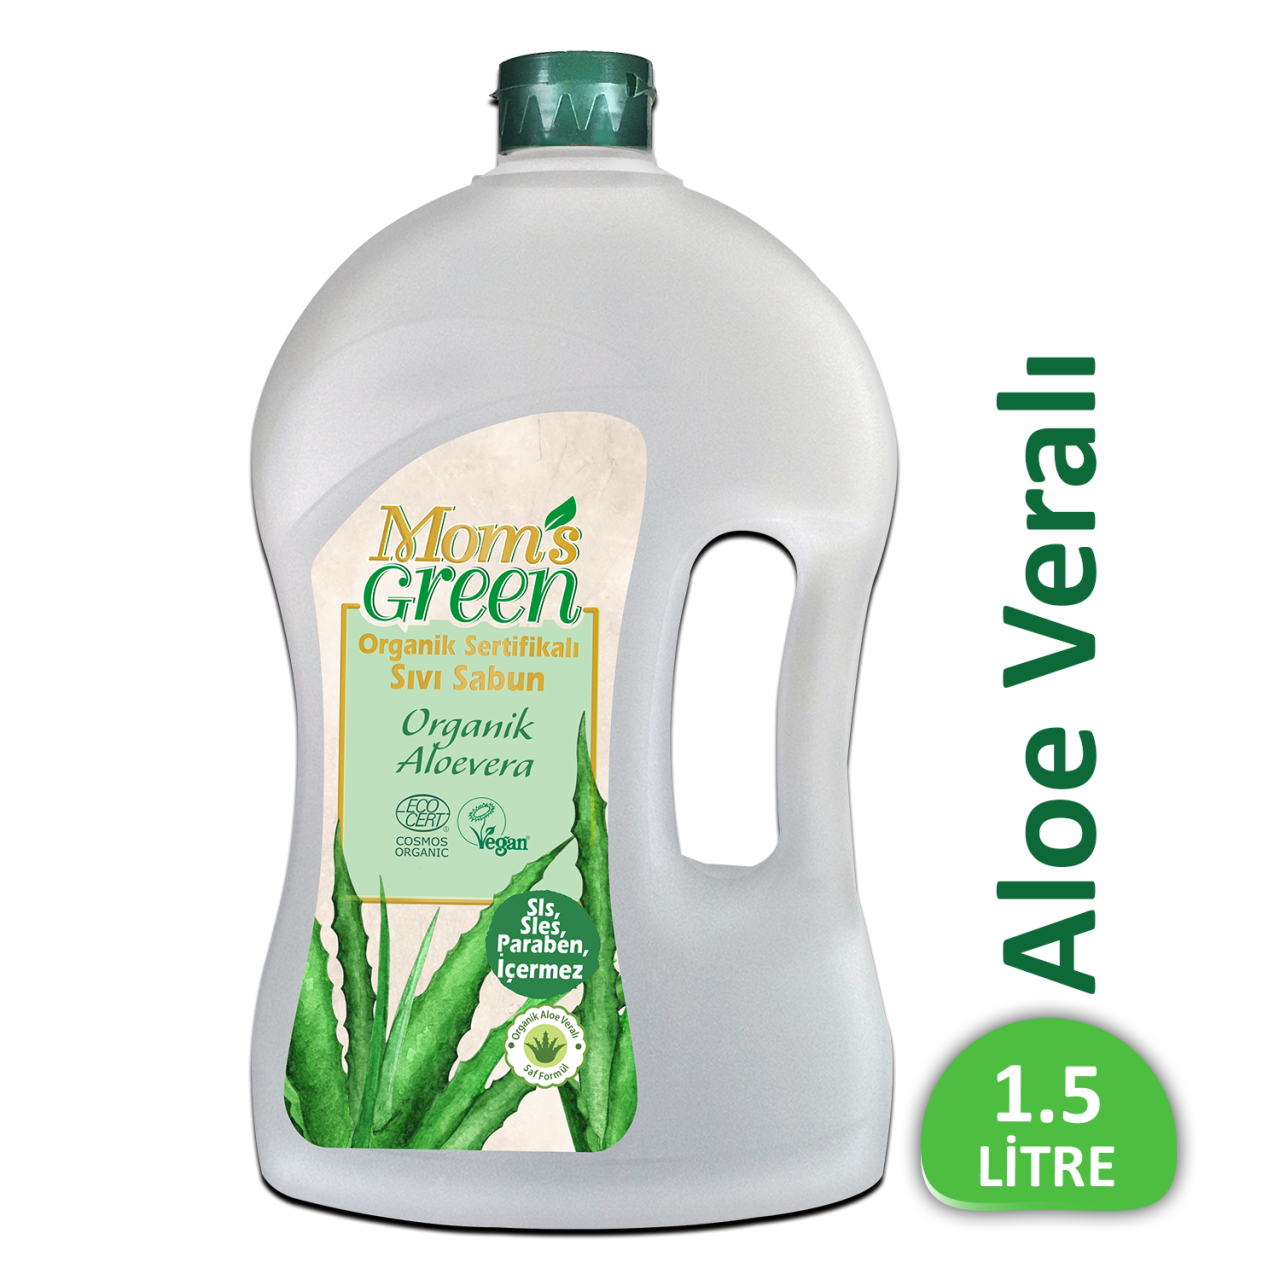 Mom's Green Organik Sertifikalı Sıvı Sabun - Organik Aloeveralı 1.5 LT EcoCosmos